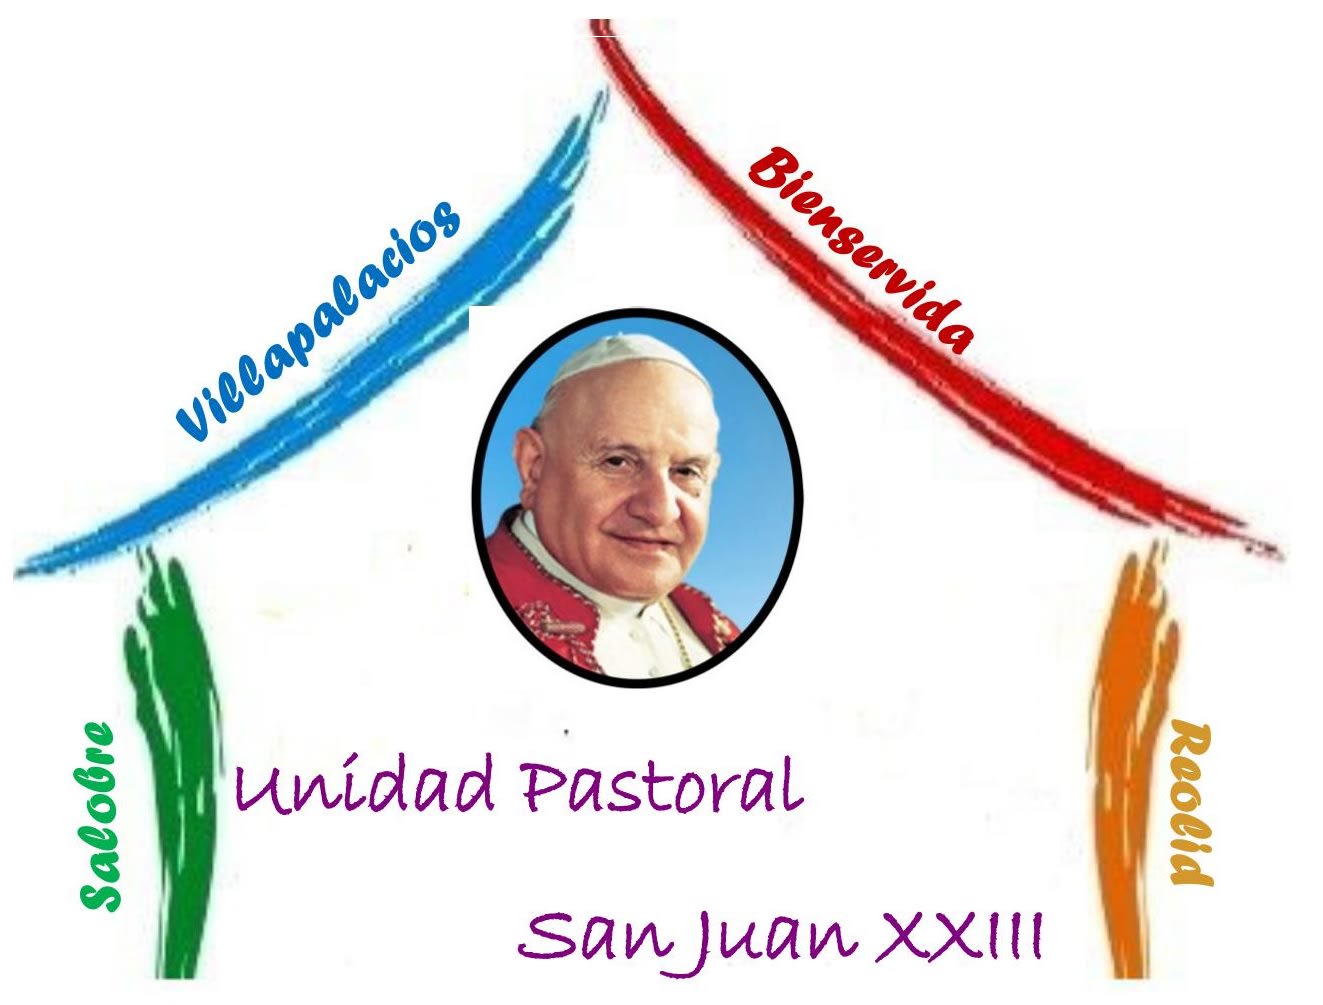 Unidad Pastoral Juan XXIII